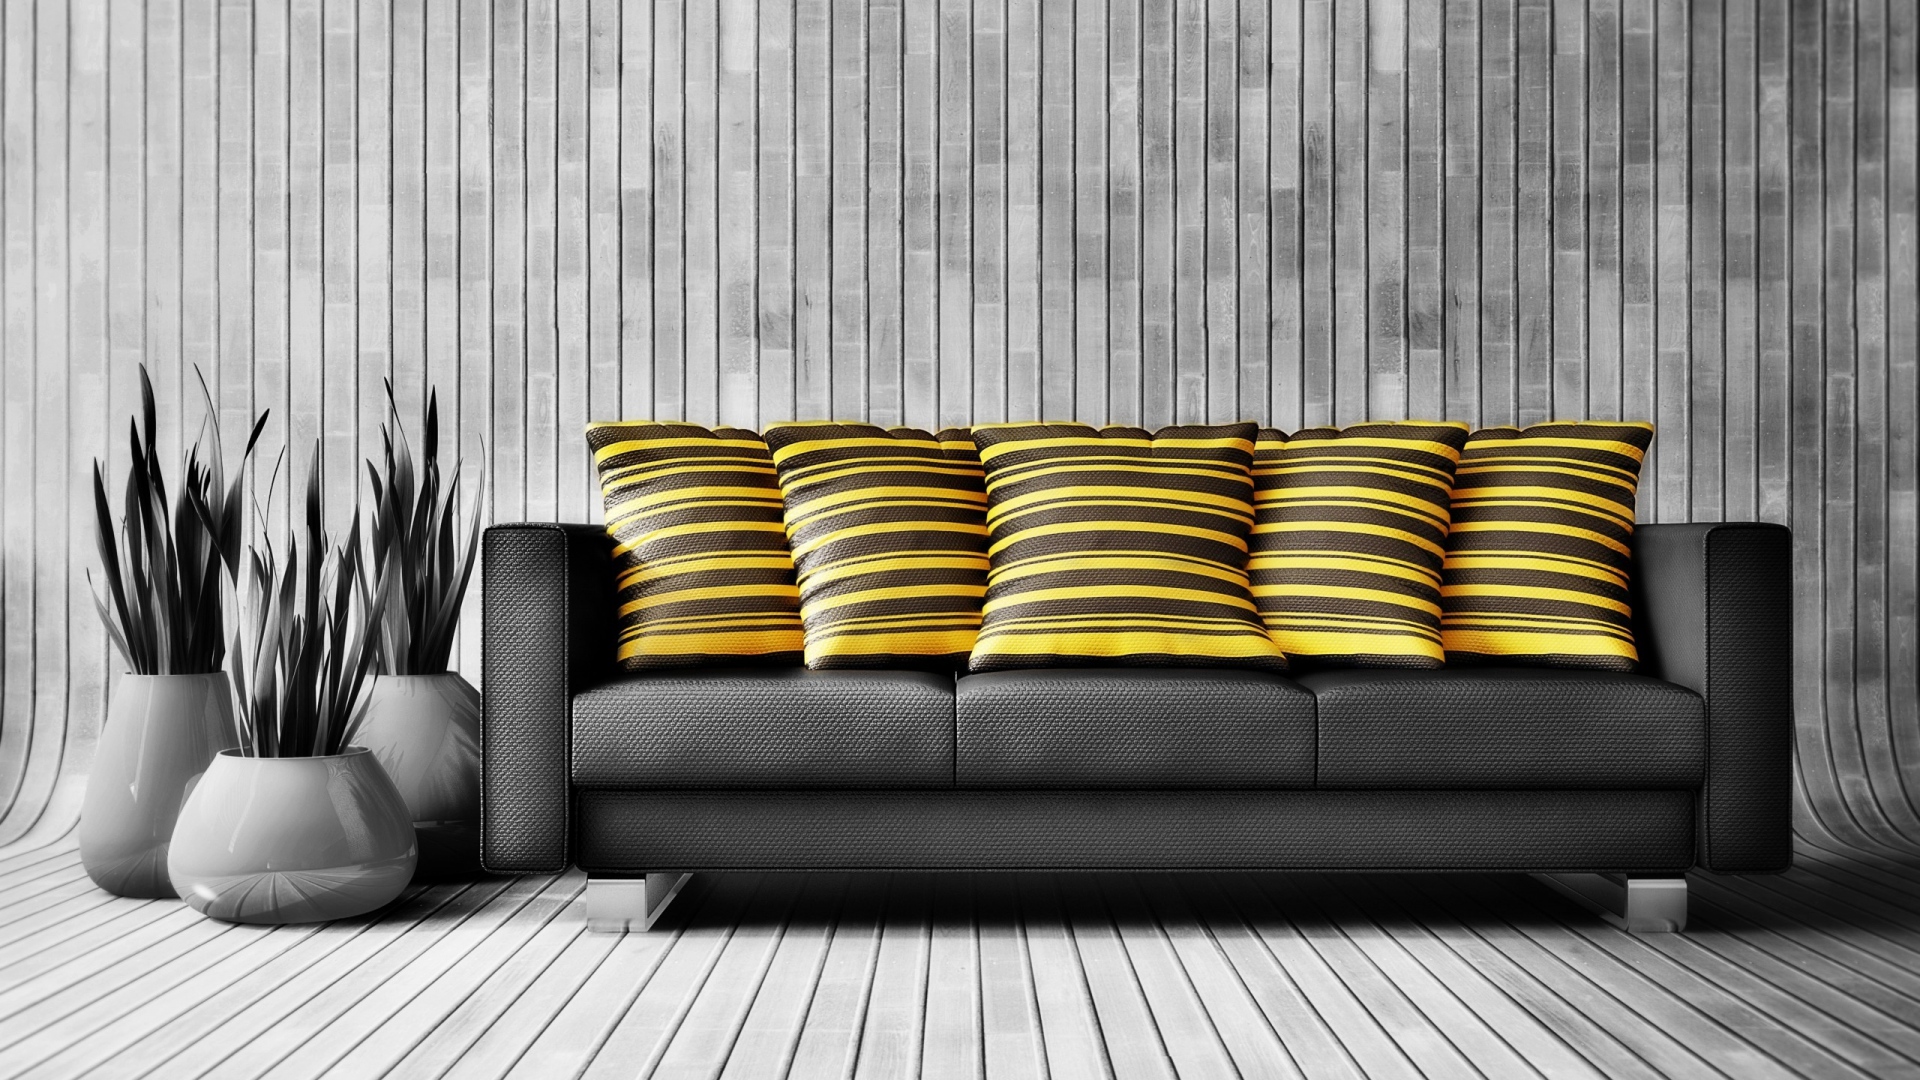 Furniture Wallpapers Hd Free Download Pixelstalk Net